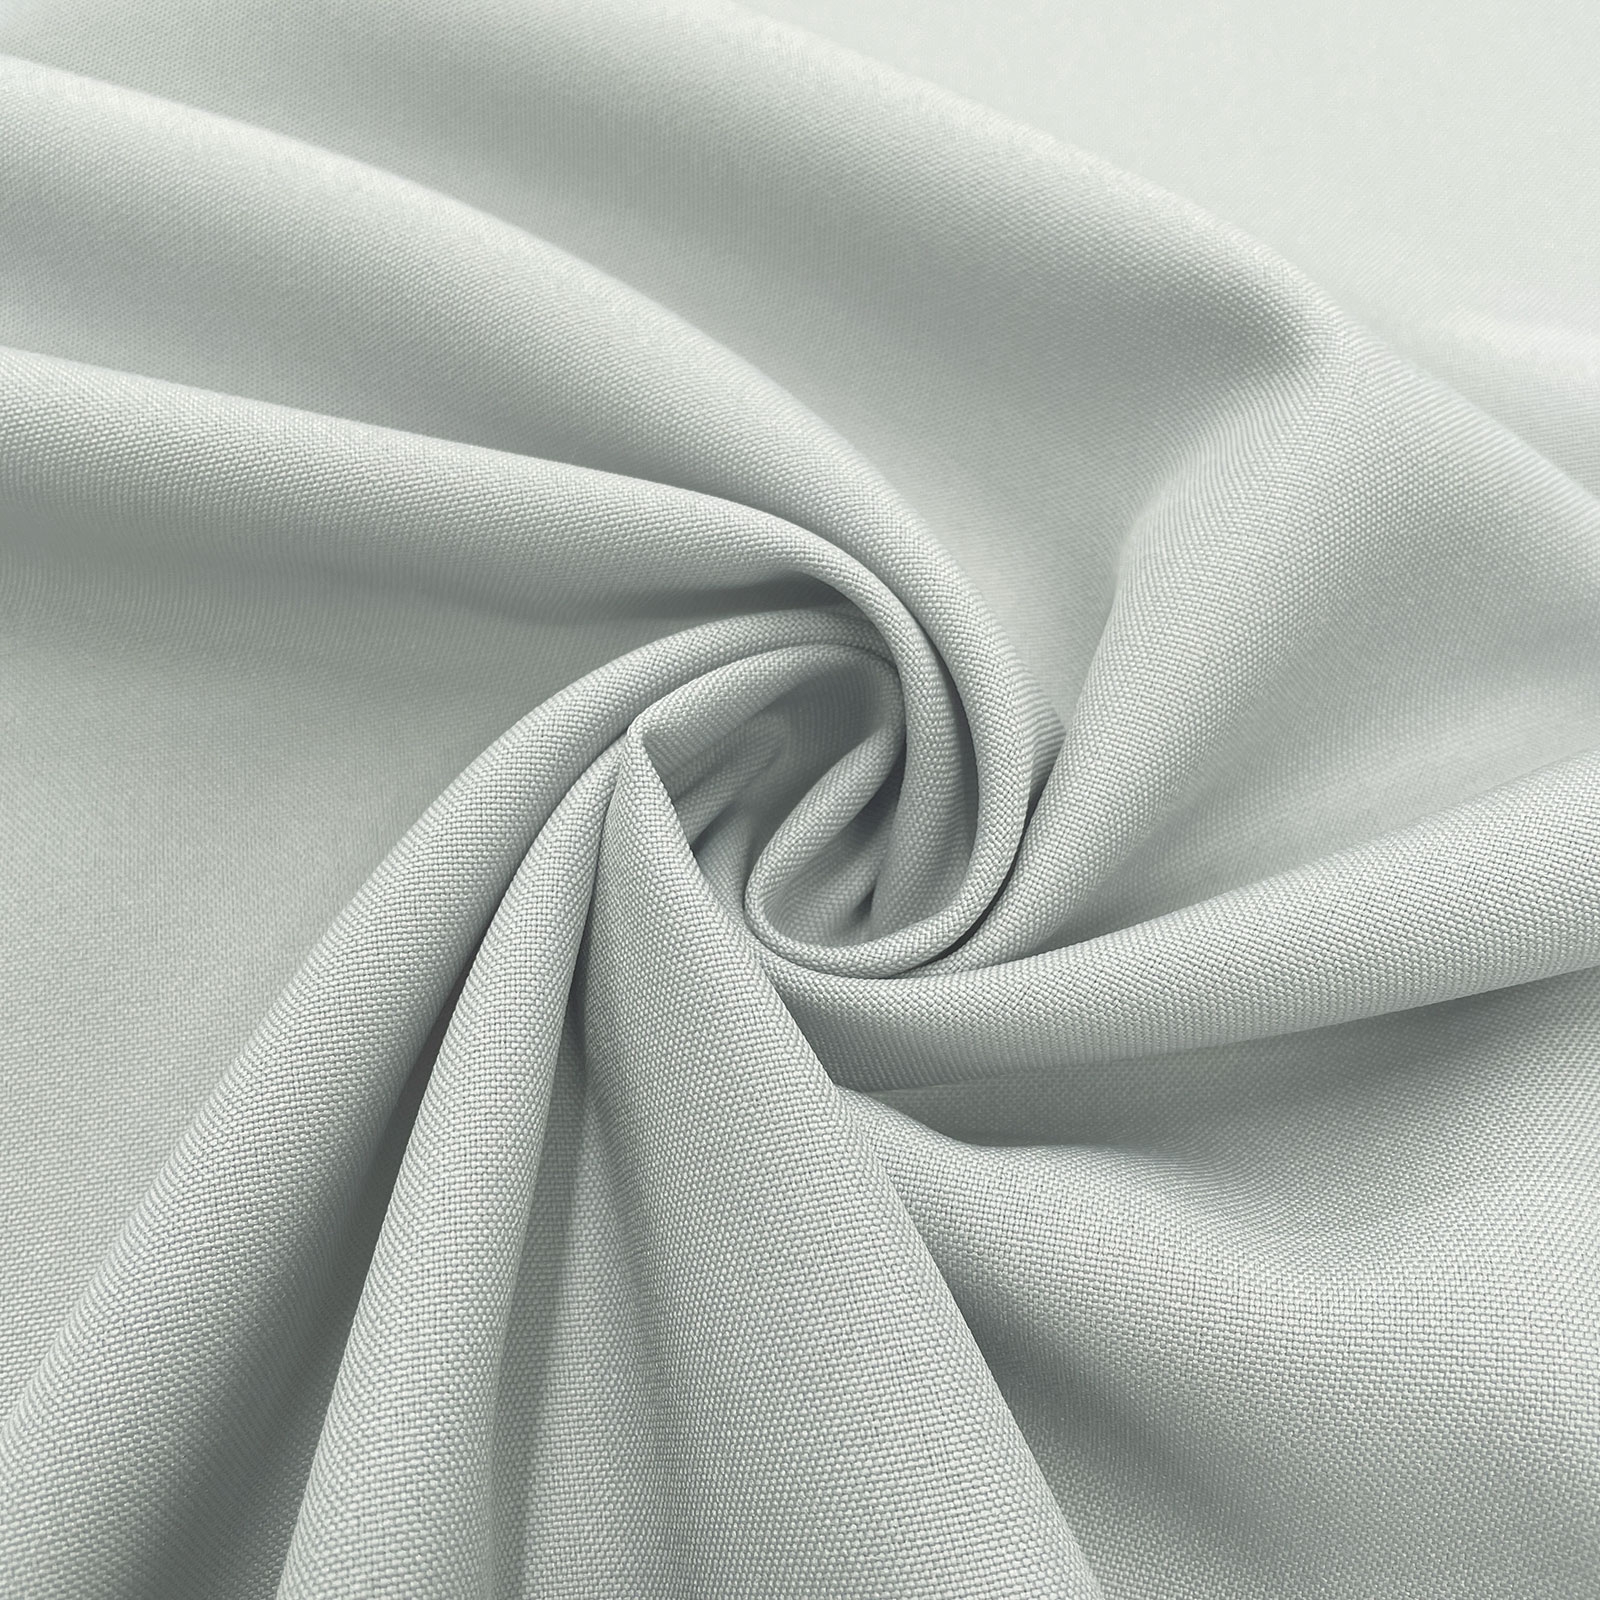 Trekking Functional fabric - slightly elastic & breathable - Light Grey